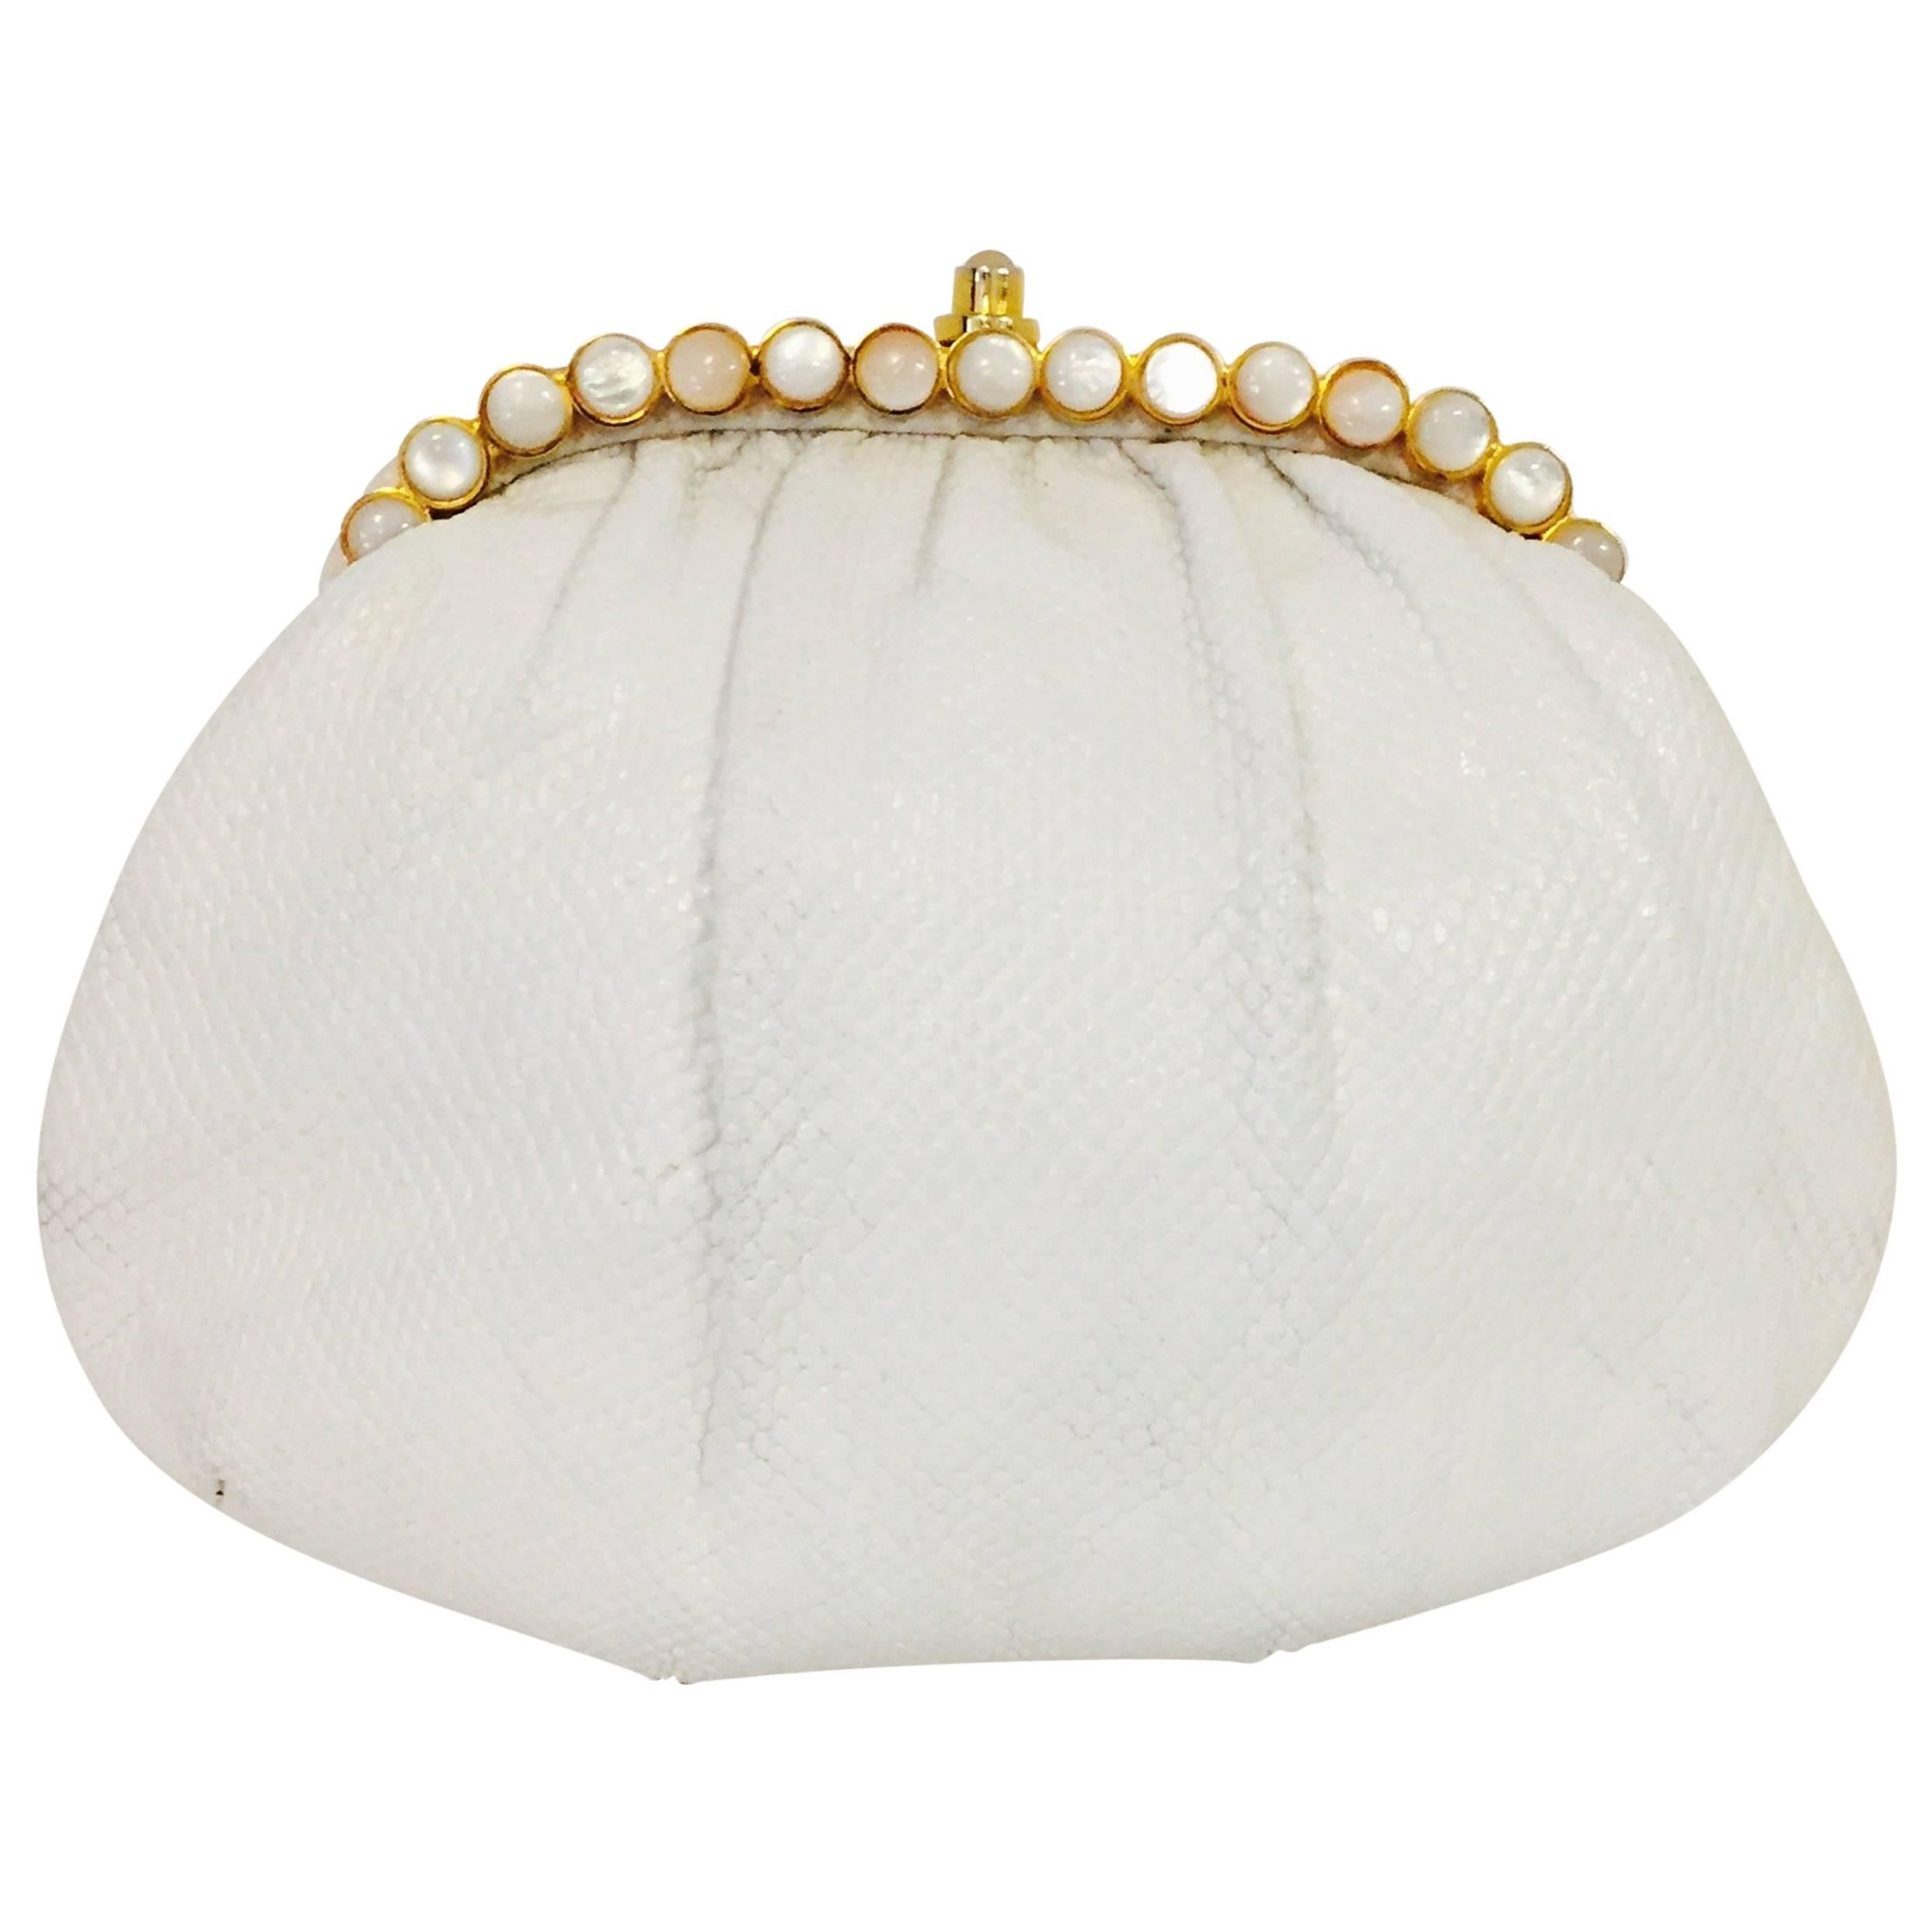 Jeweled Judith Leiber White Lizard Karung Clutch/Shoulder Bag For Sale